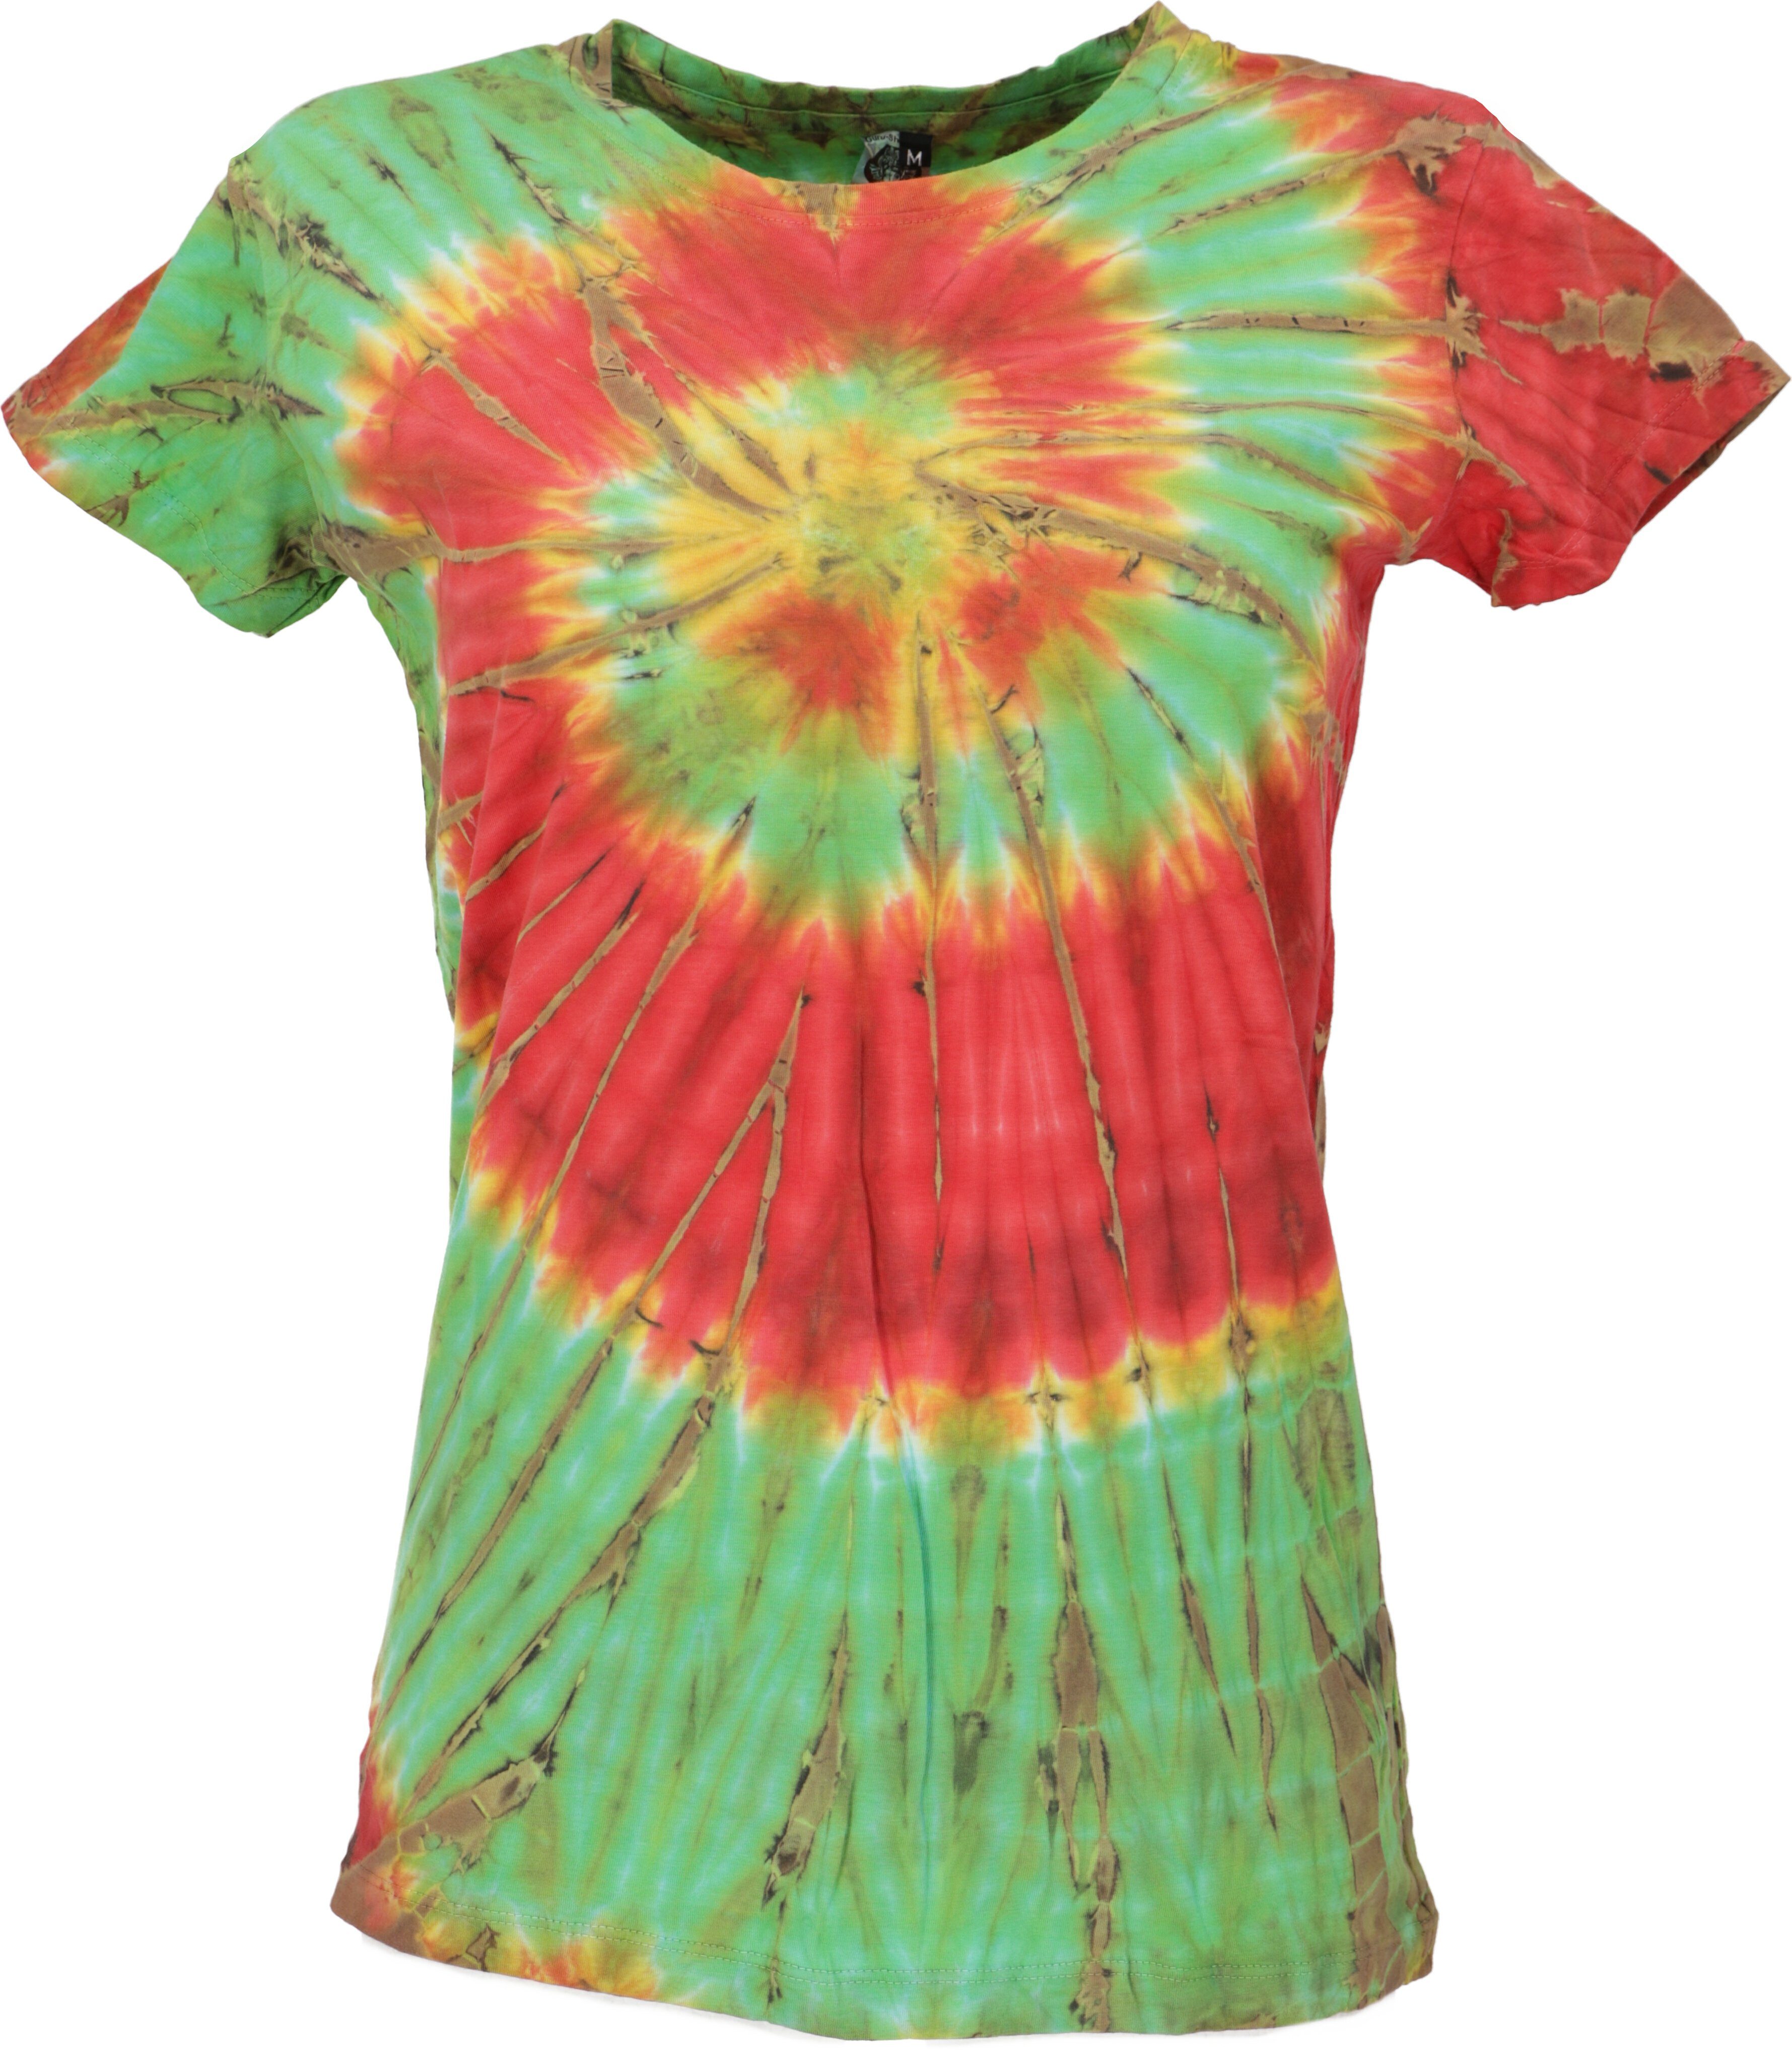 Guru-Shop T-Shirt »Batik T-Shirt für Damen, Tie Dye Goa Shirt -..«  Festival, Ethno Style, Hippie, alternative Bekleidung